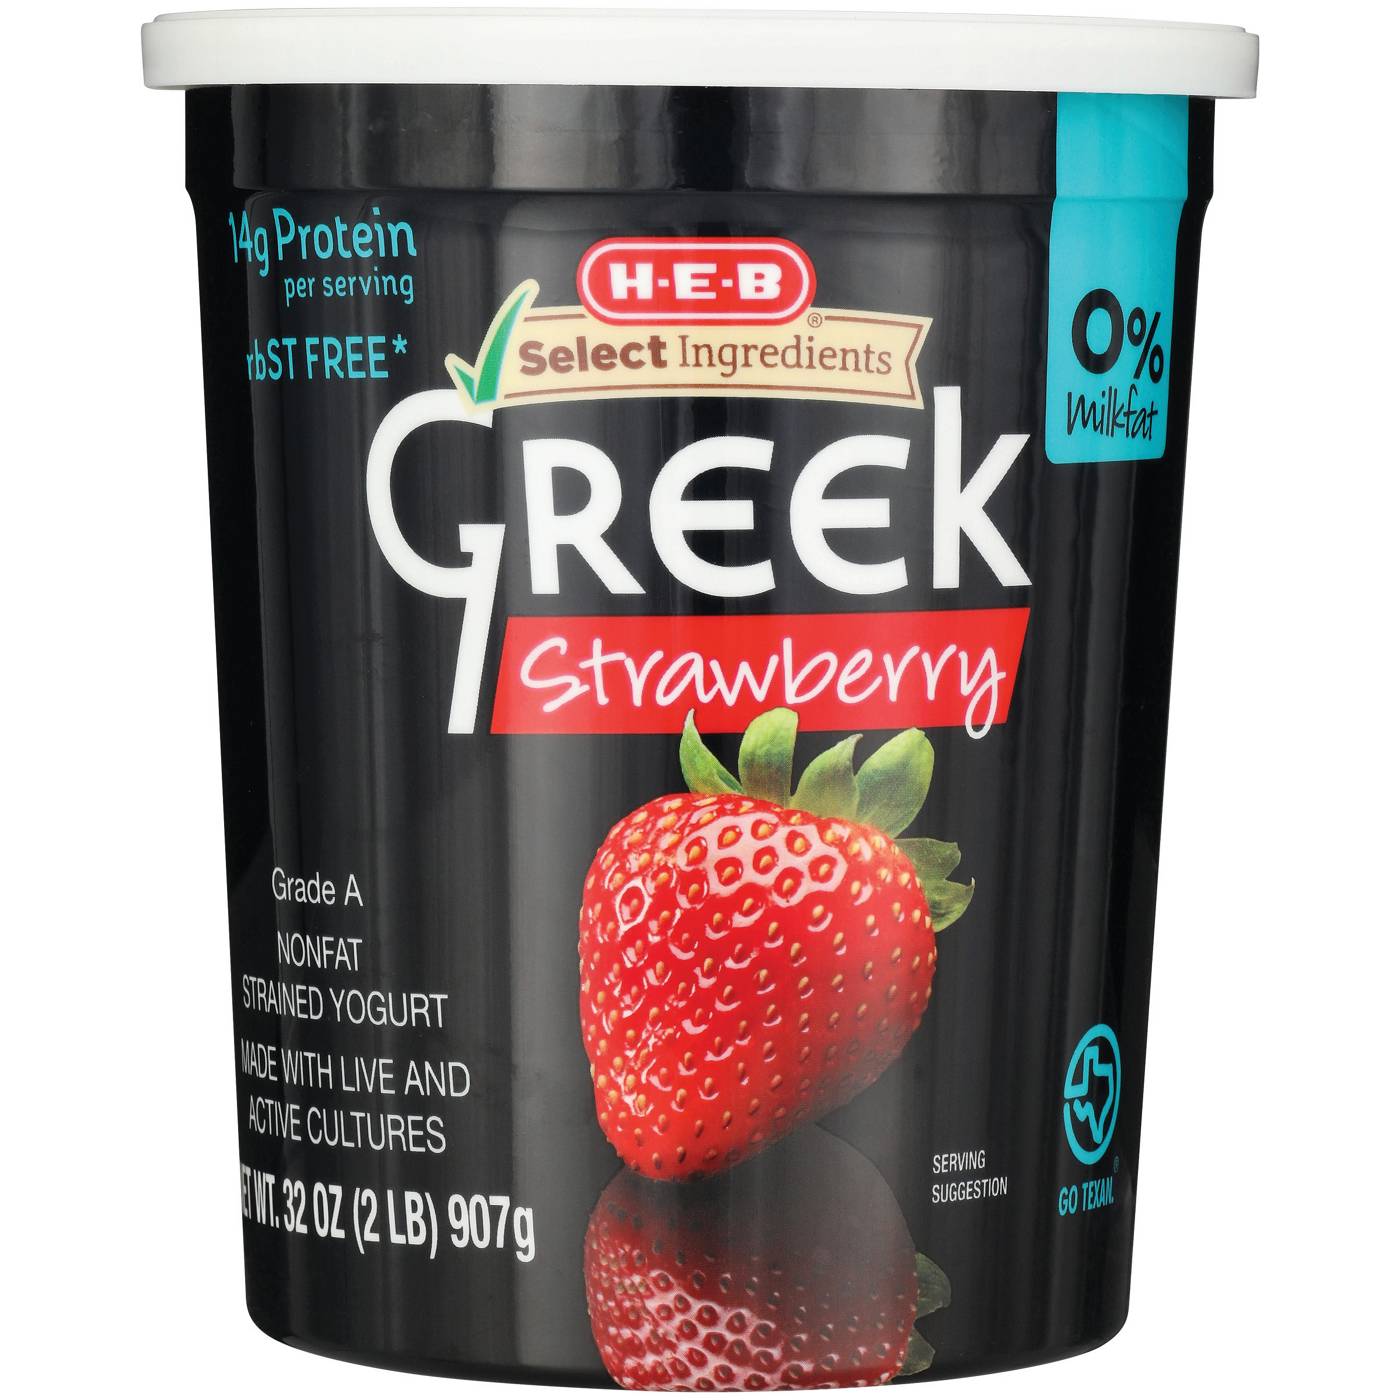 H-E-B 14g Protein Nonfat Greek Yogurt - Strawberry; image 2 of 2